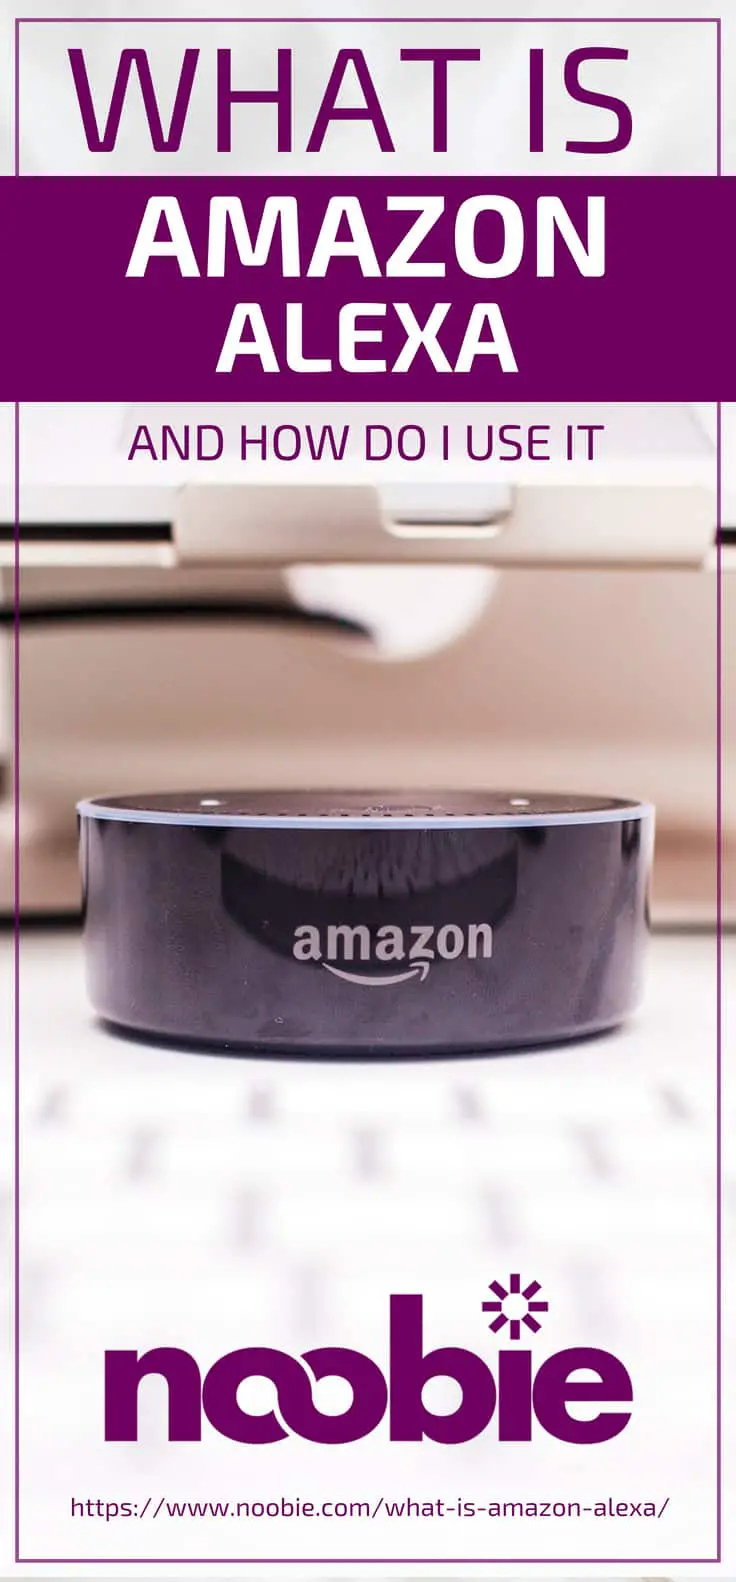 What Is Amazon Alexa And How Do I Use It? | Alexa by Amazon | What does Alexa do | Alexa skills | https://noobie.com/what-is-amazon-alexa/